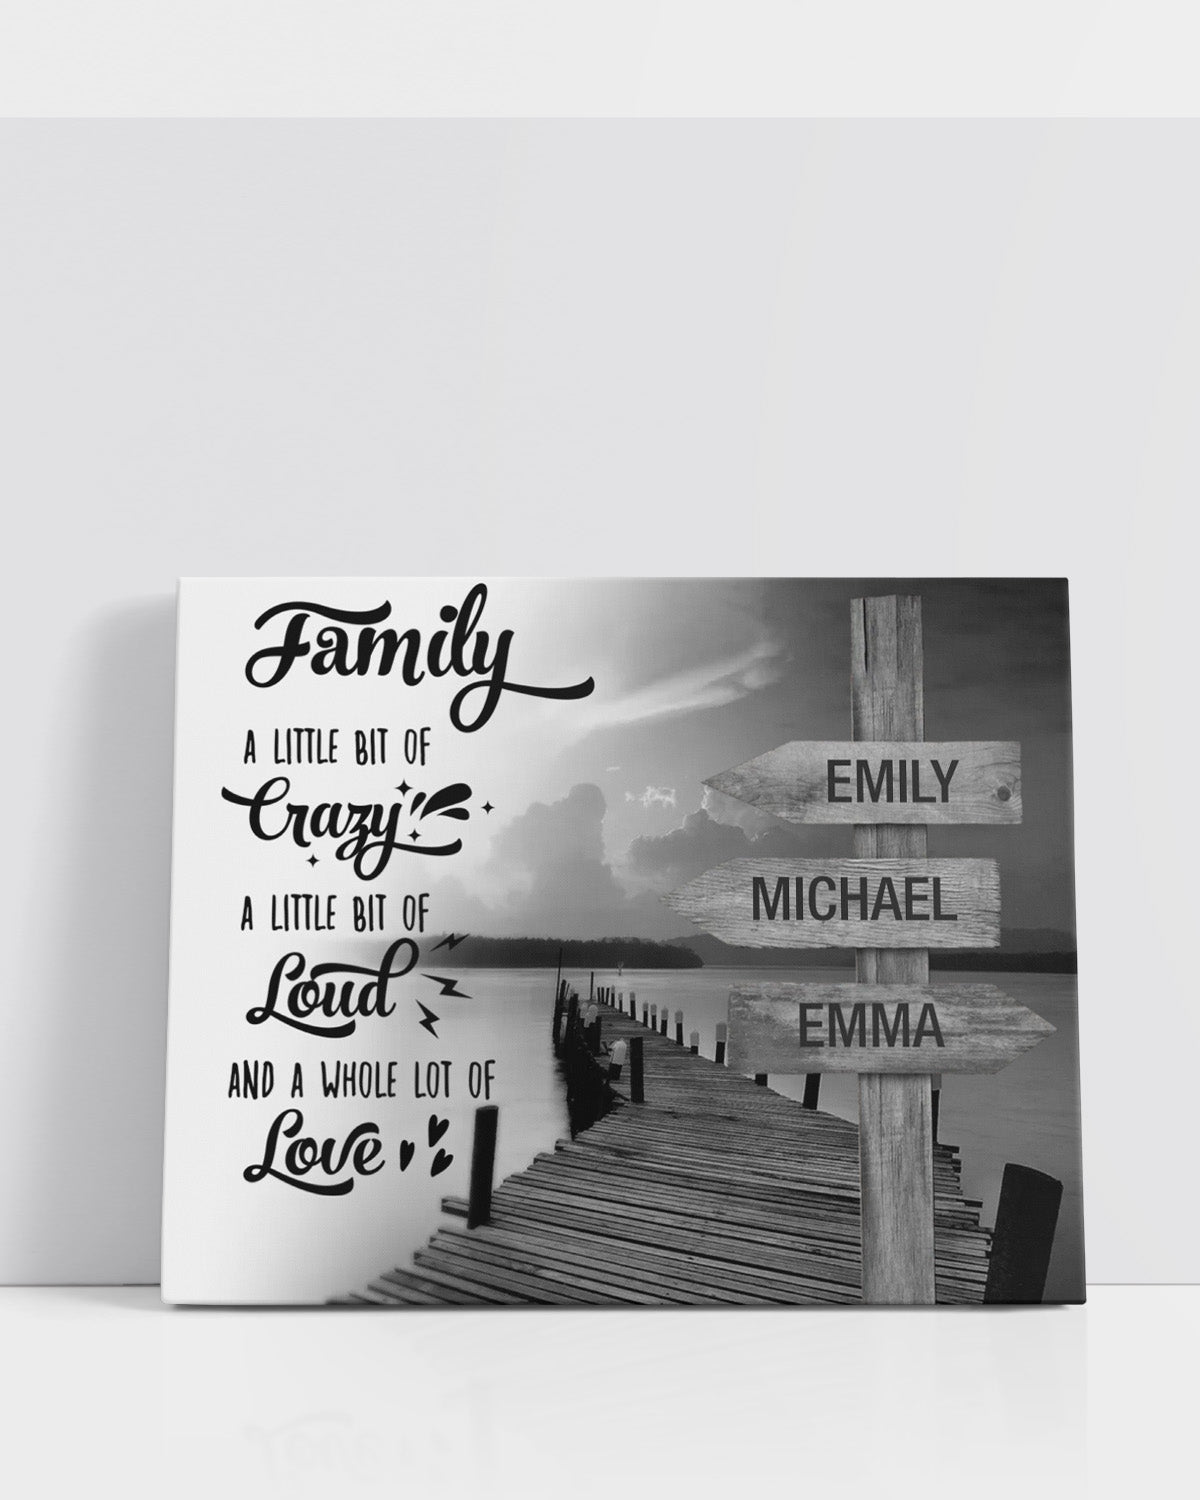 Customizable Ocean Dock Family Wall Art Canvas - (Multi-Name Family members) - Family Personalized Custom Horizontal Canvas